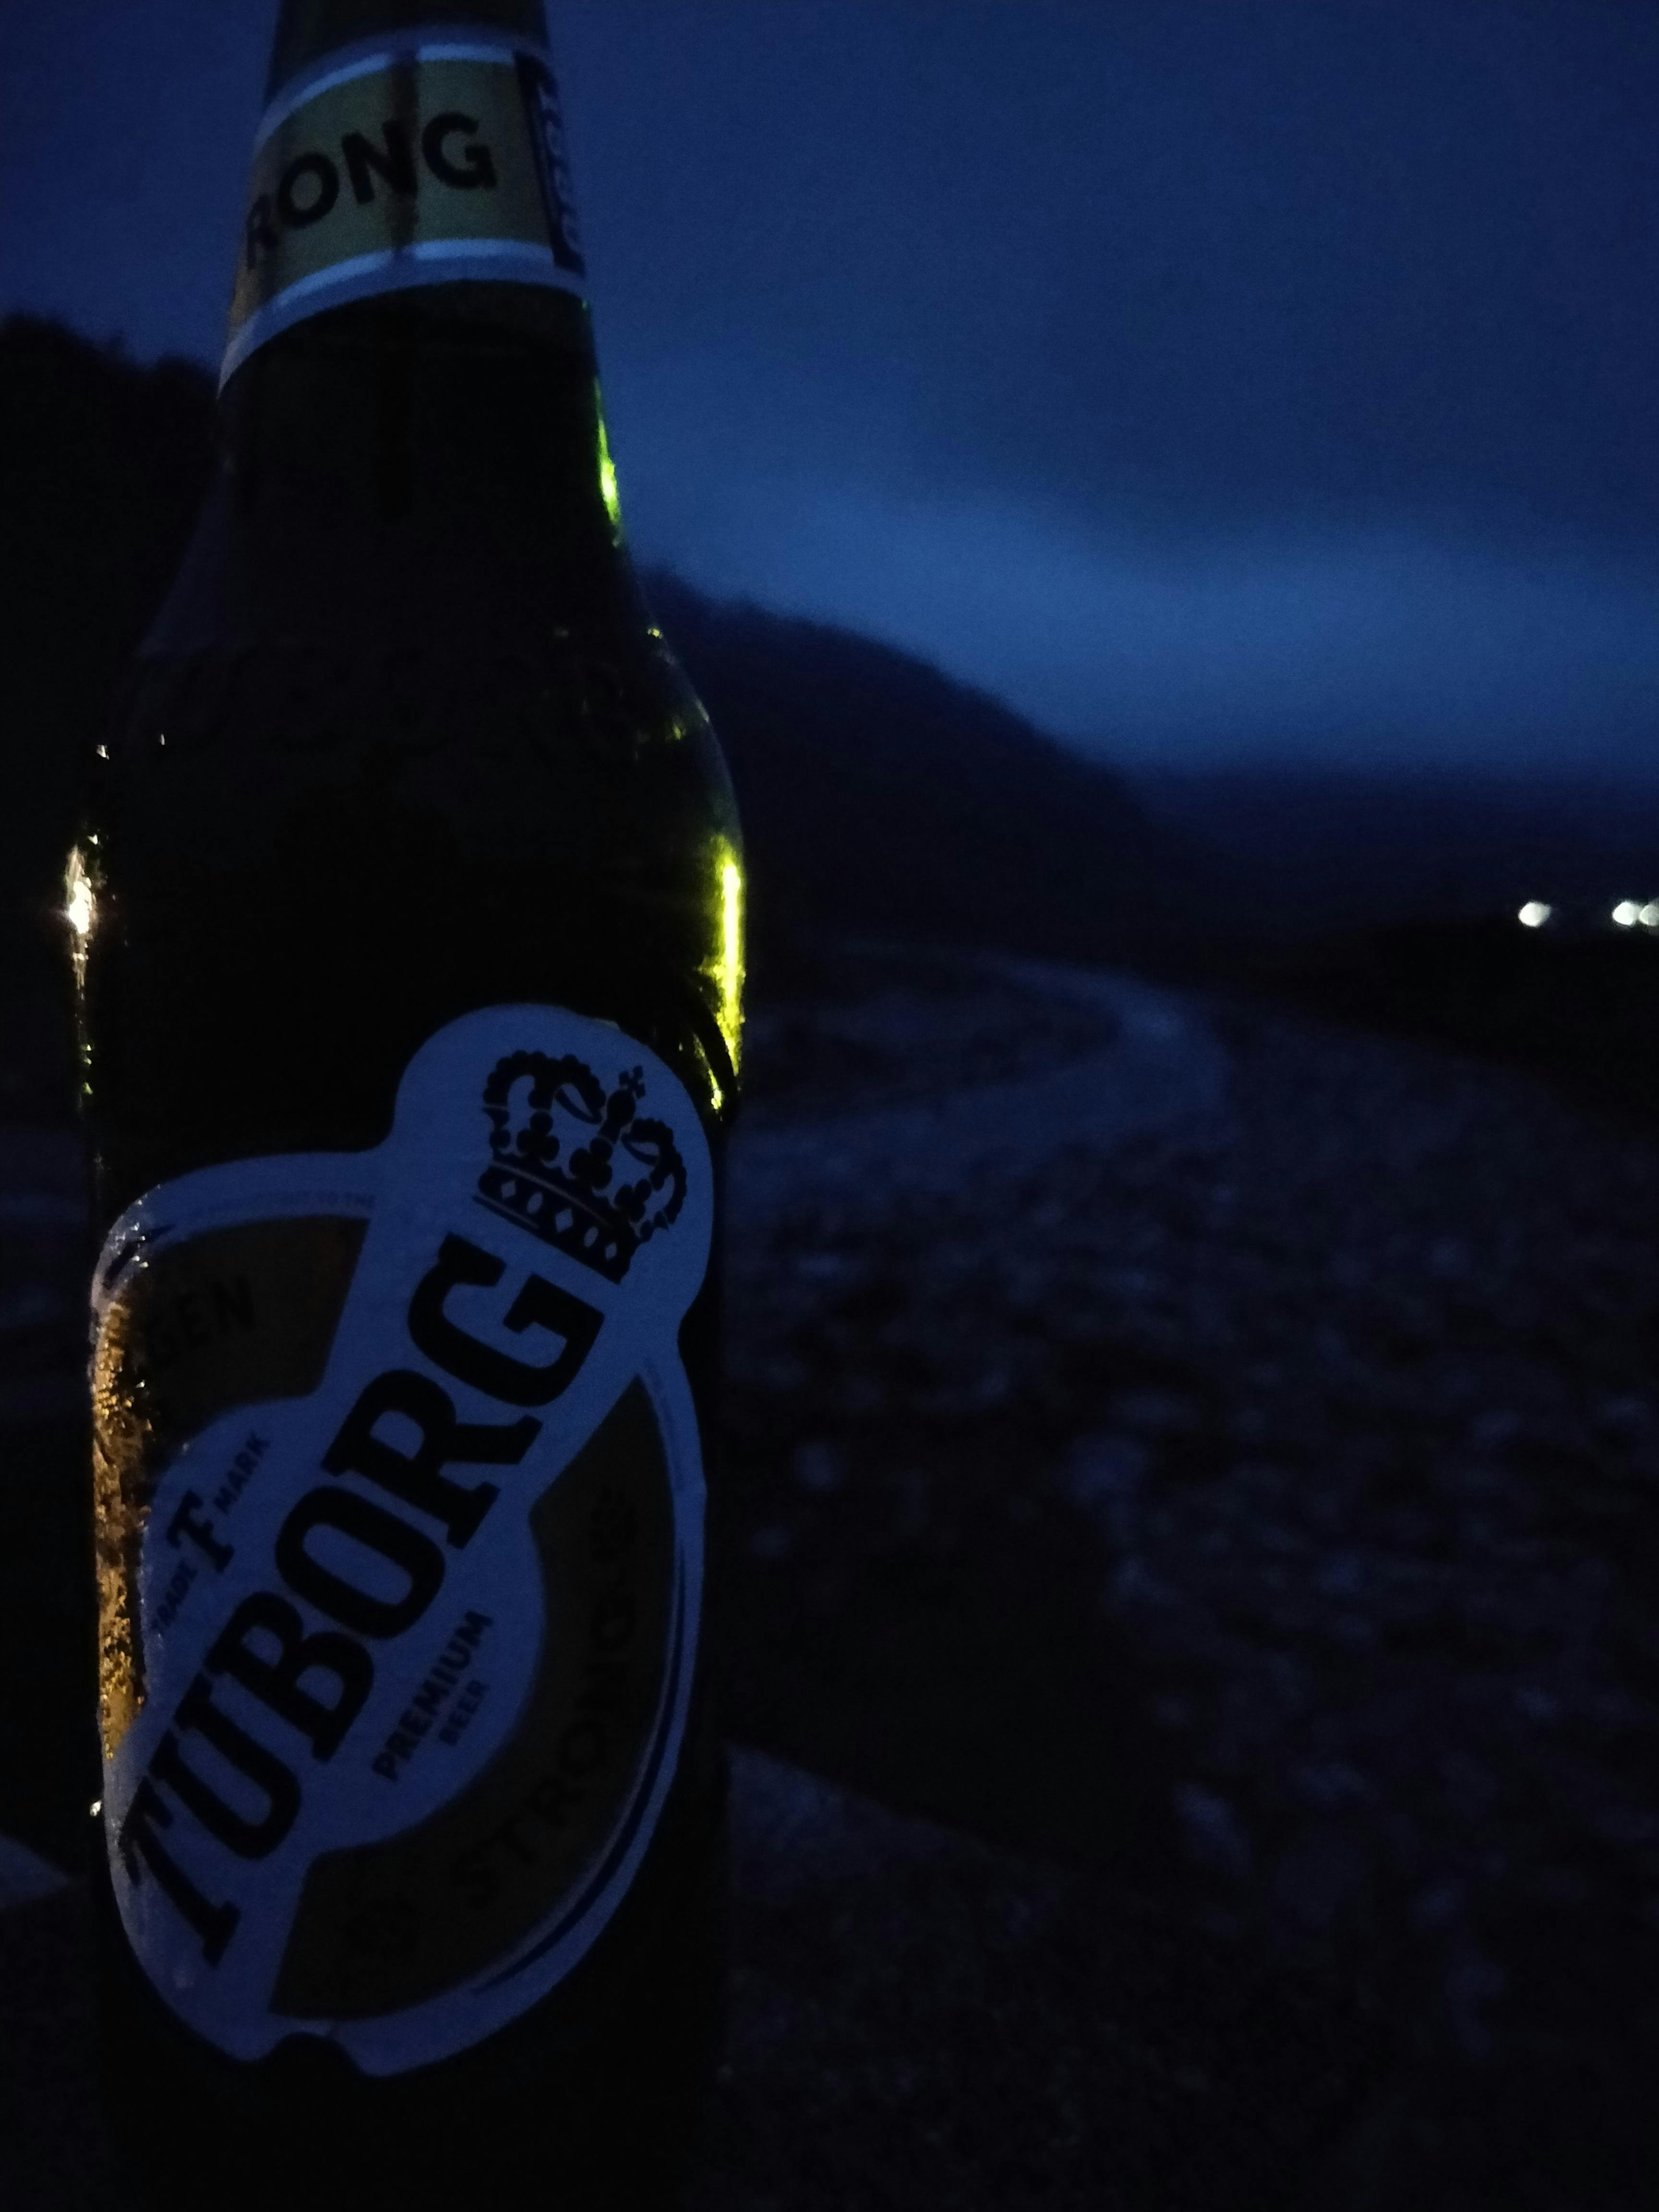 Free stock photo of #beer #nature #dusk #rivers #tuborg #nature